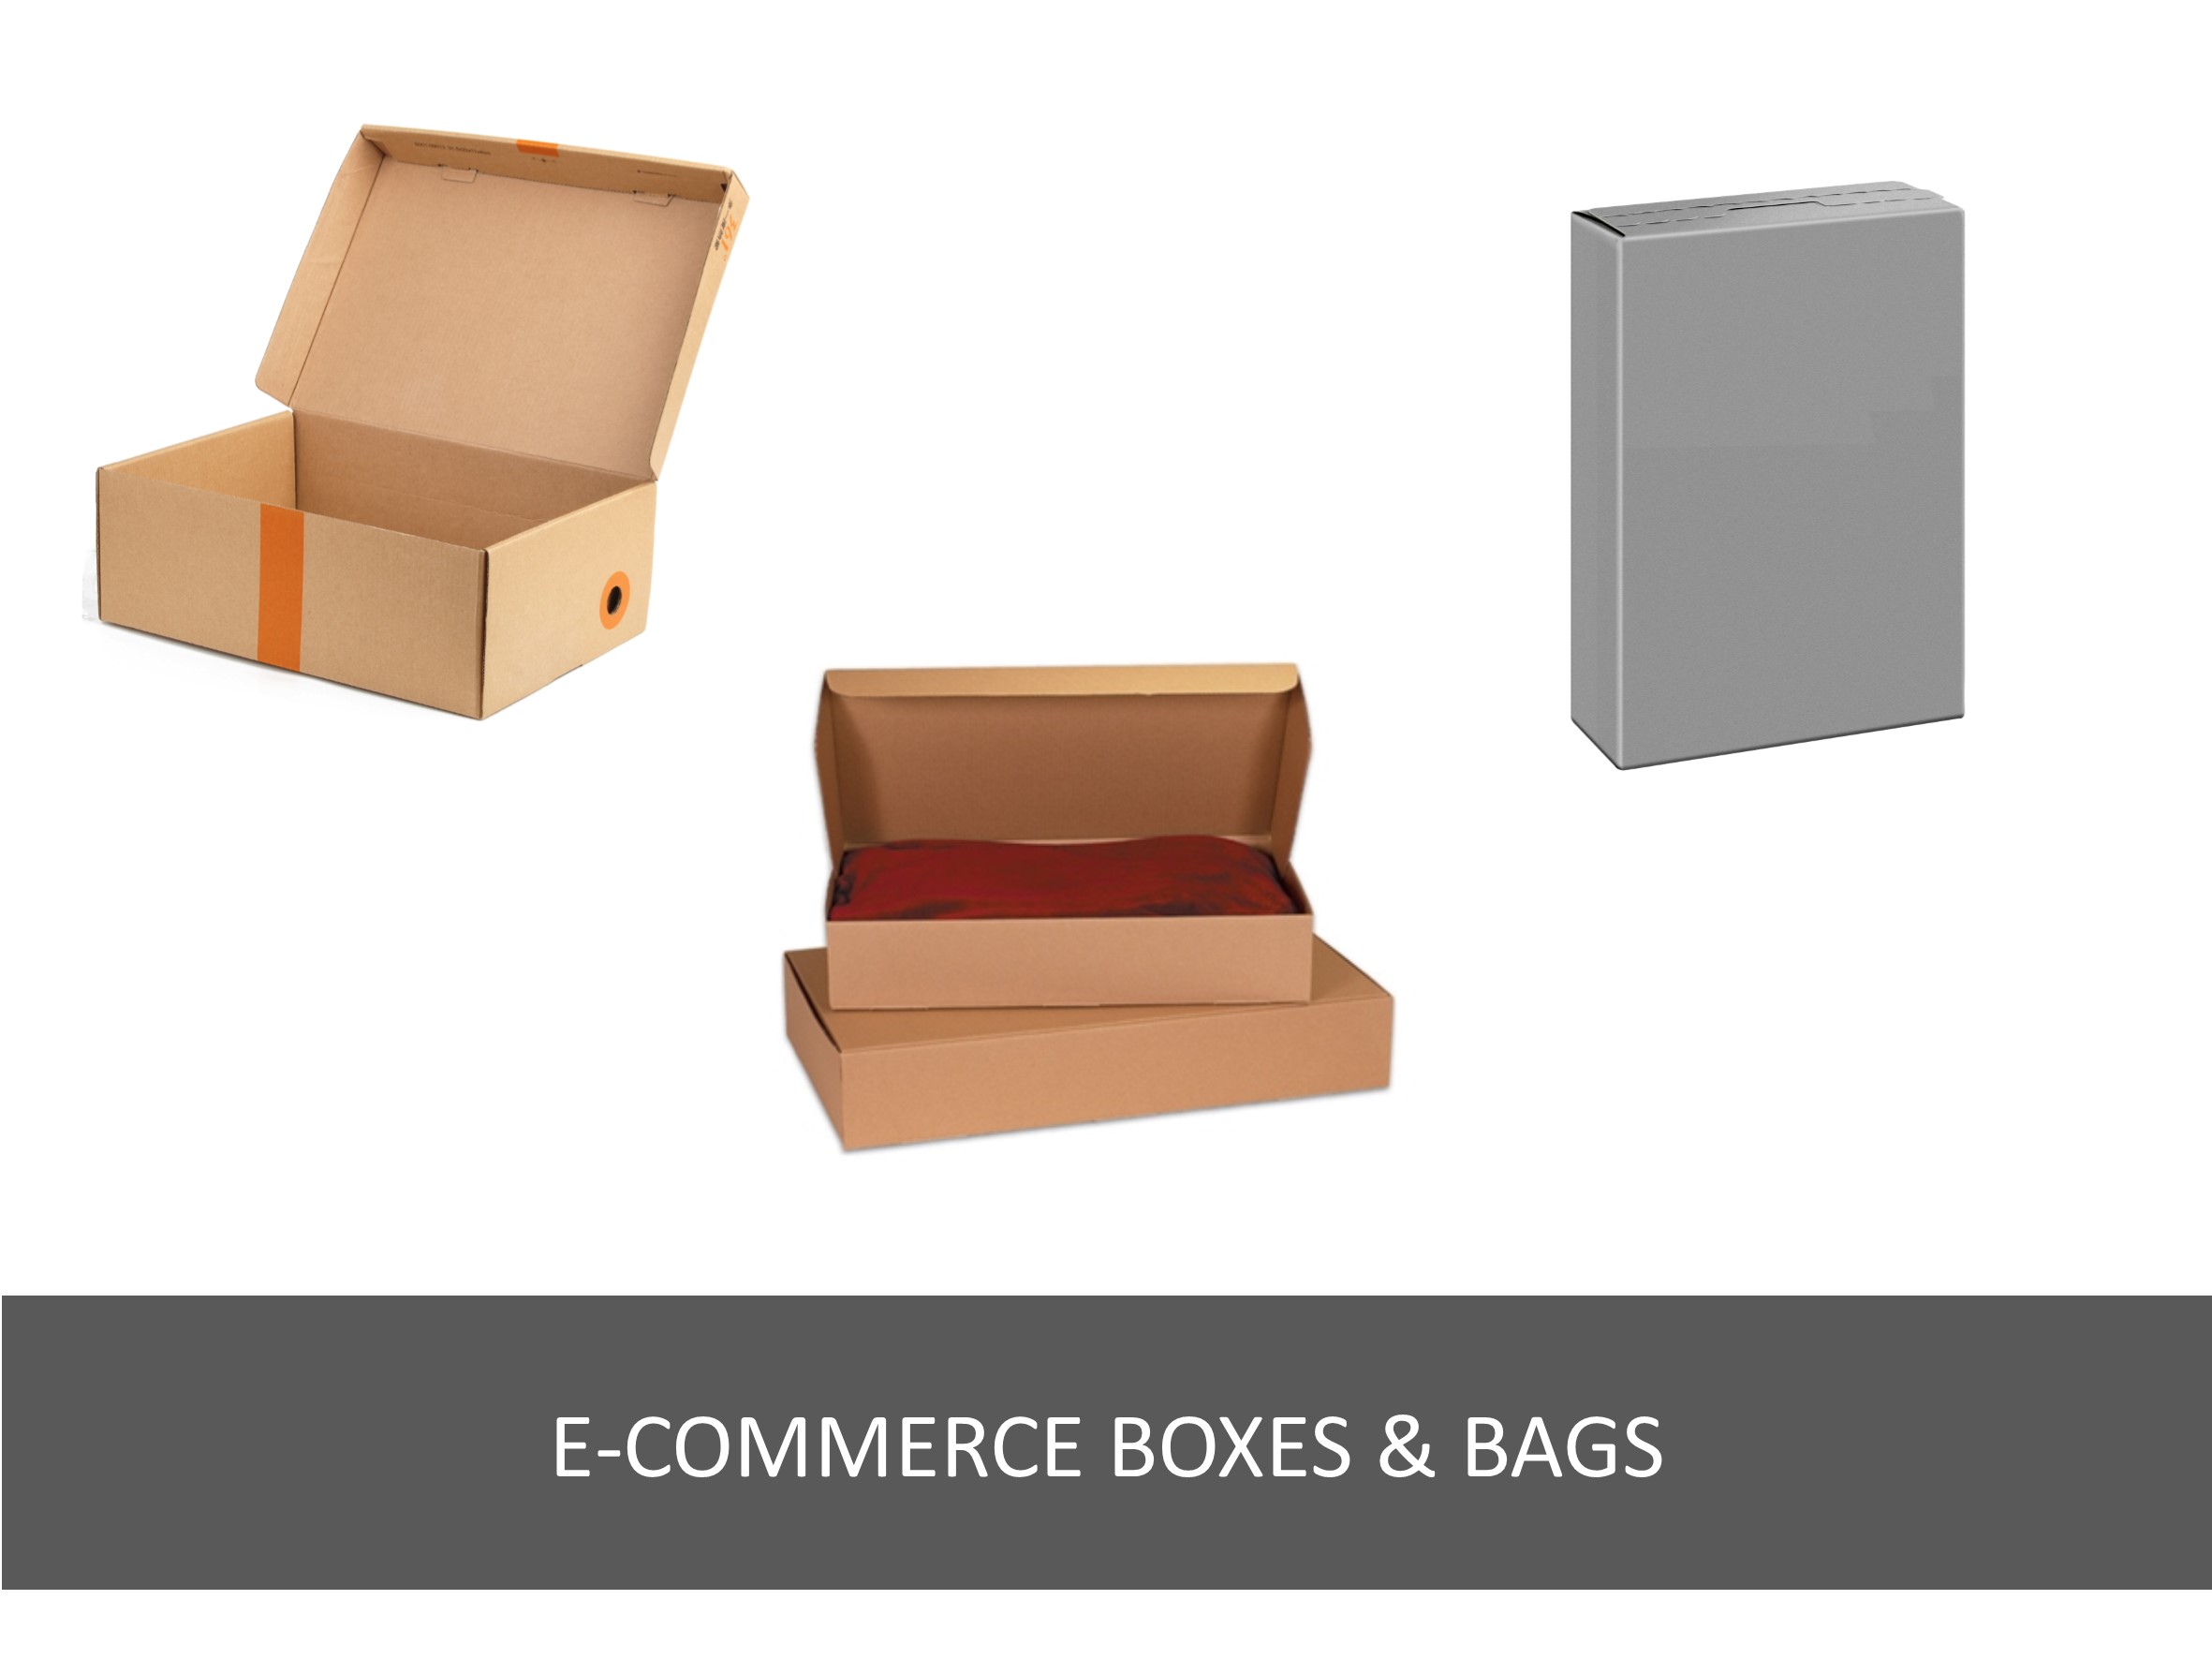 E-commerce boxes & bags